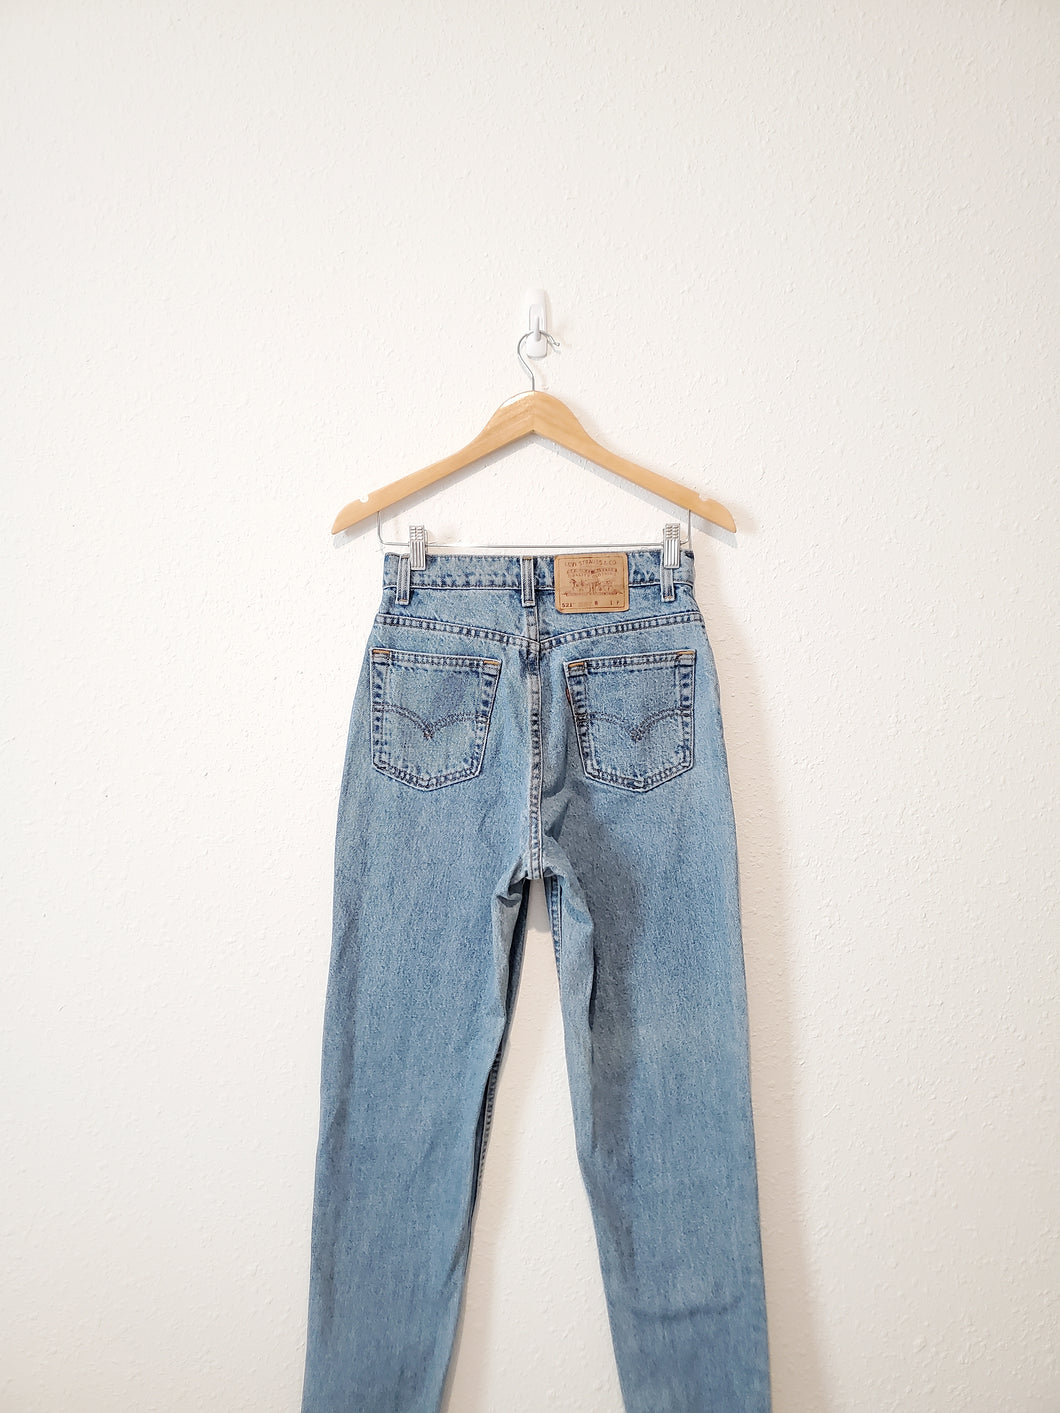 Vintage Levi's 521 Straight Jeans (26)